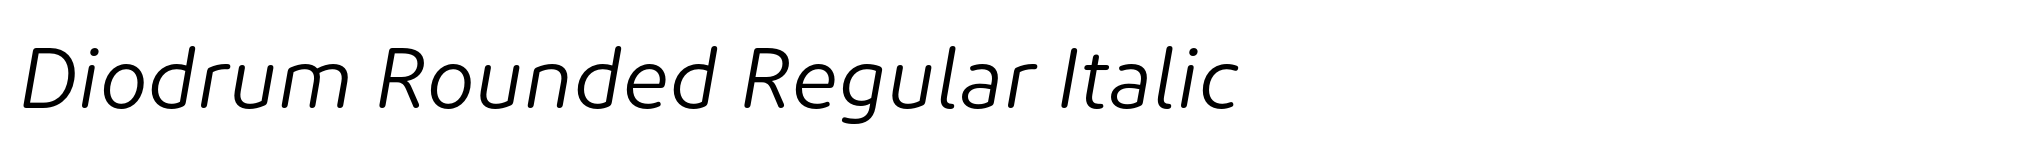 Diodrum Rounded Regular Italic image